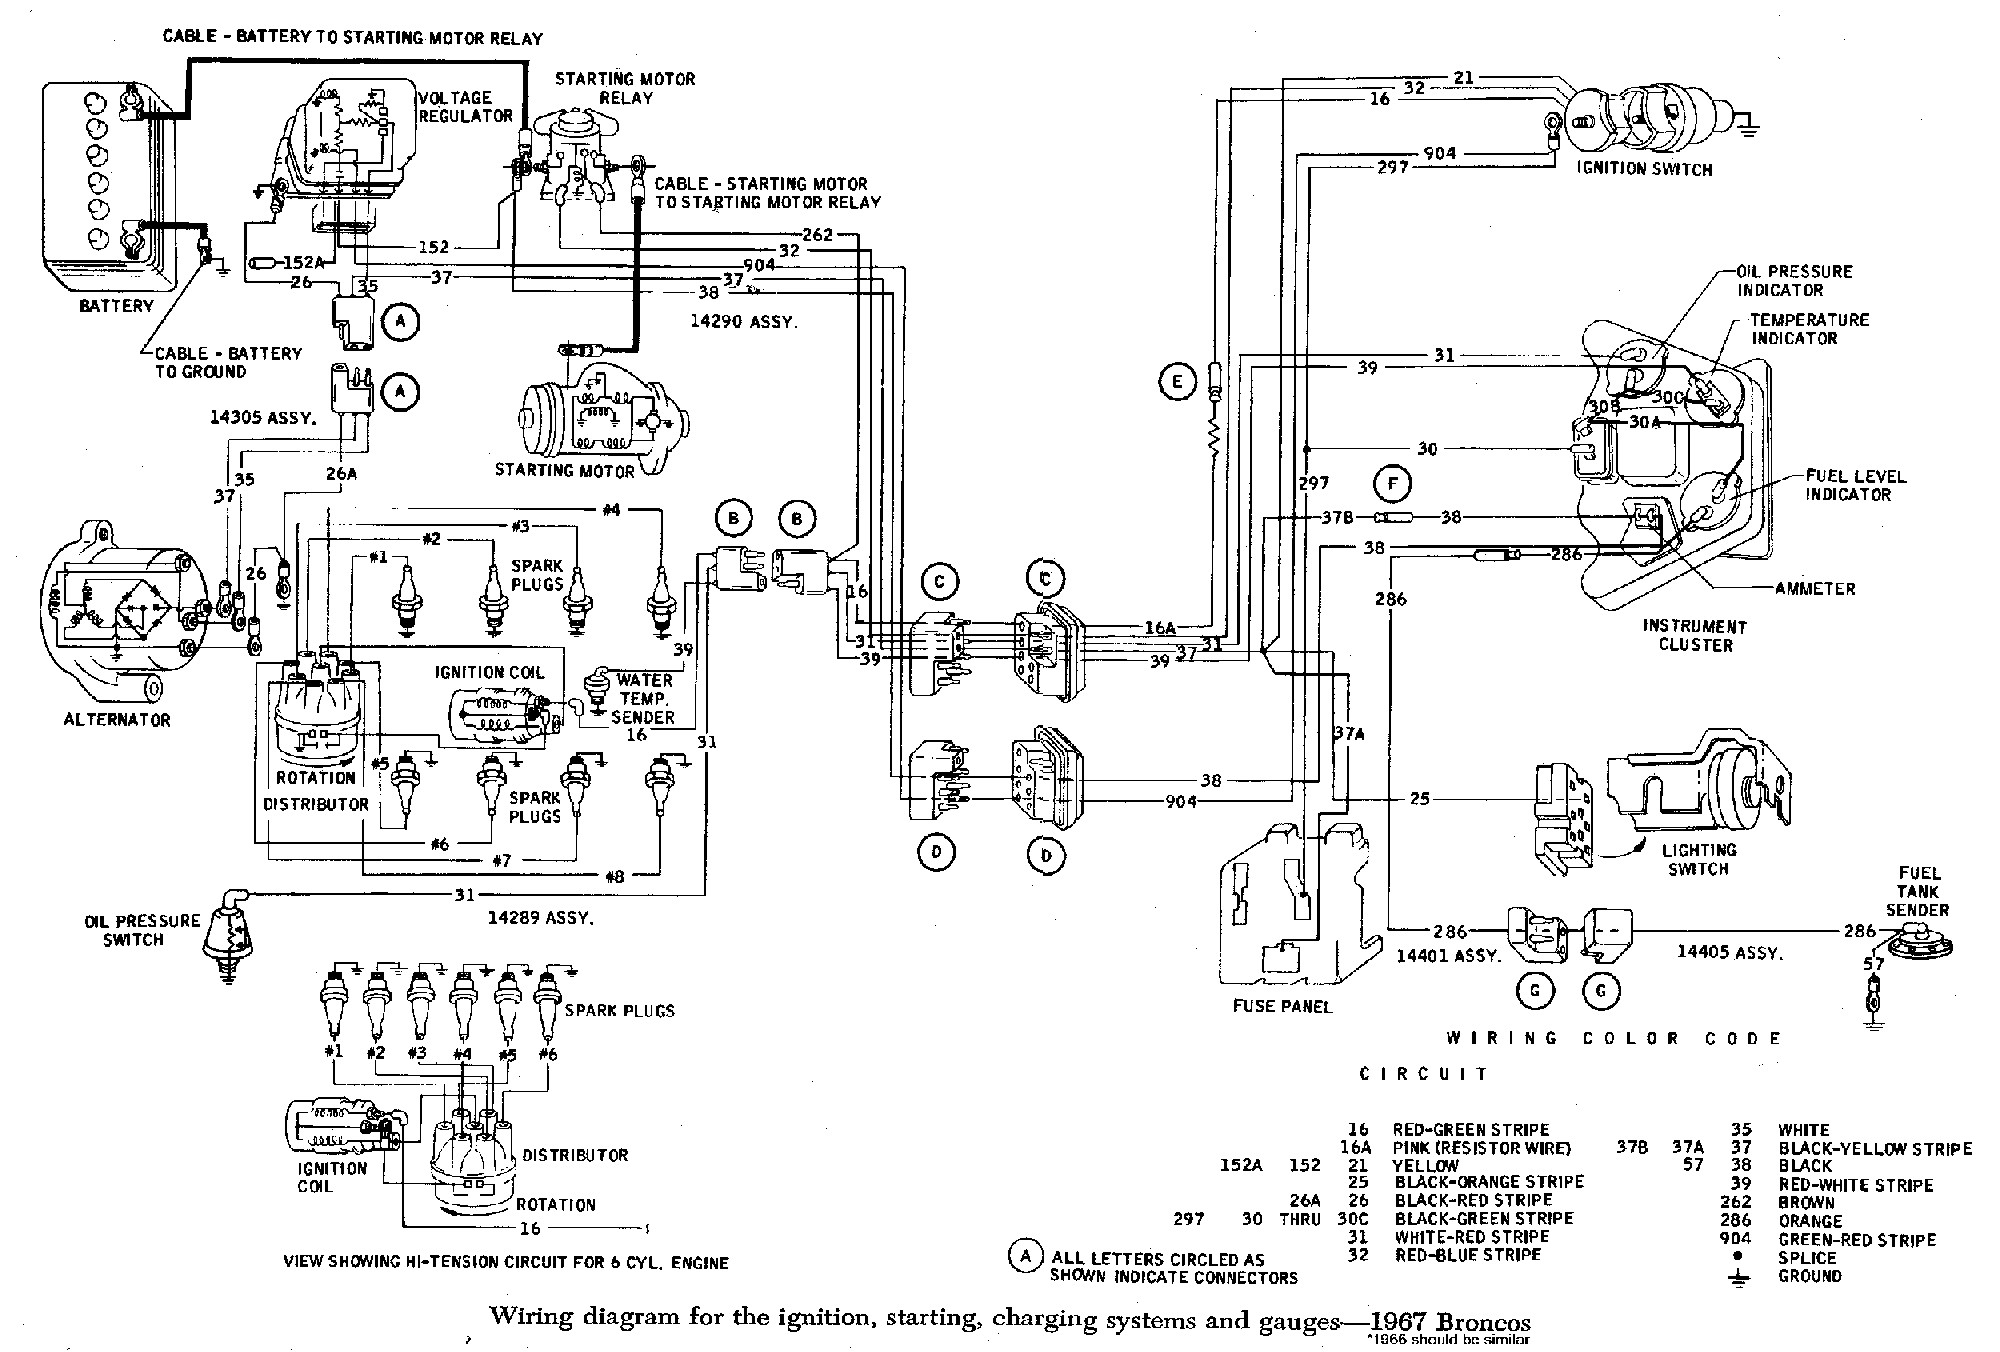 1972 Bronco Alternator Wiring Diagram 1978 ford Bronco Alternator Wiring Of 1972 Bronco Alternator Wiring Diagram